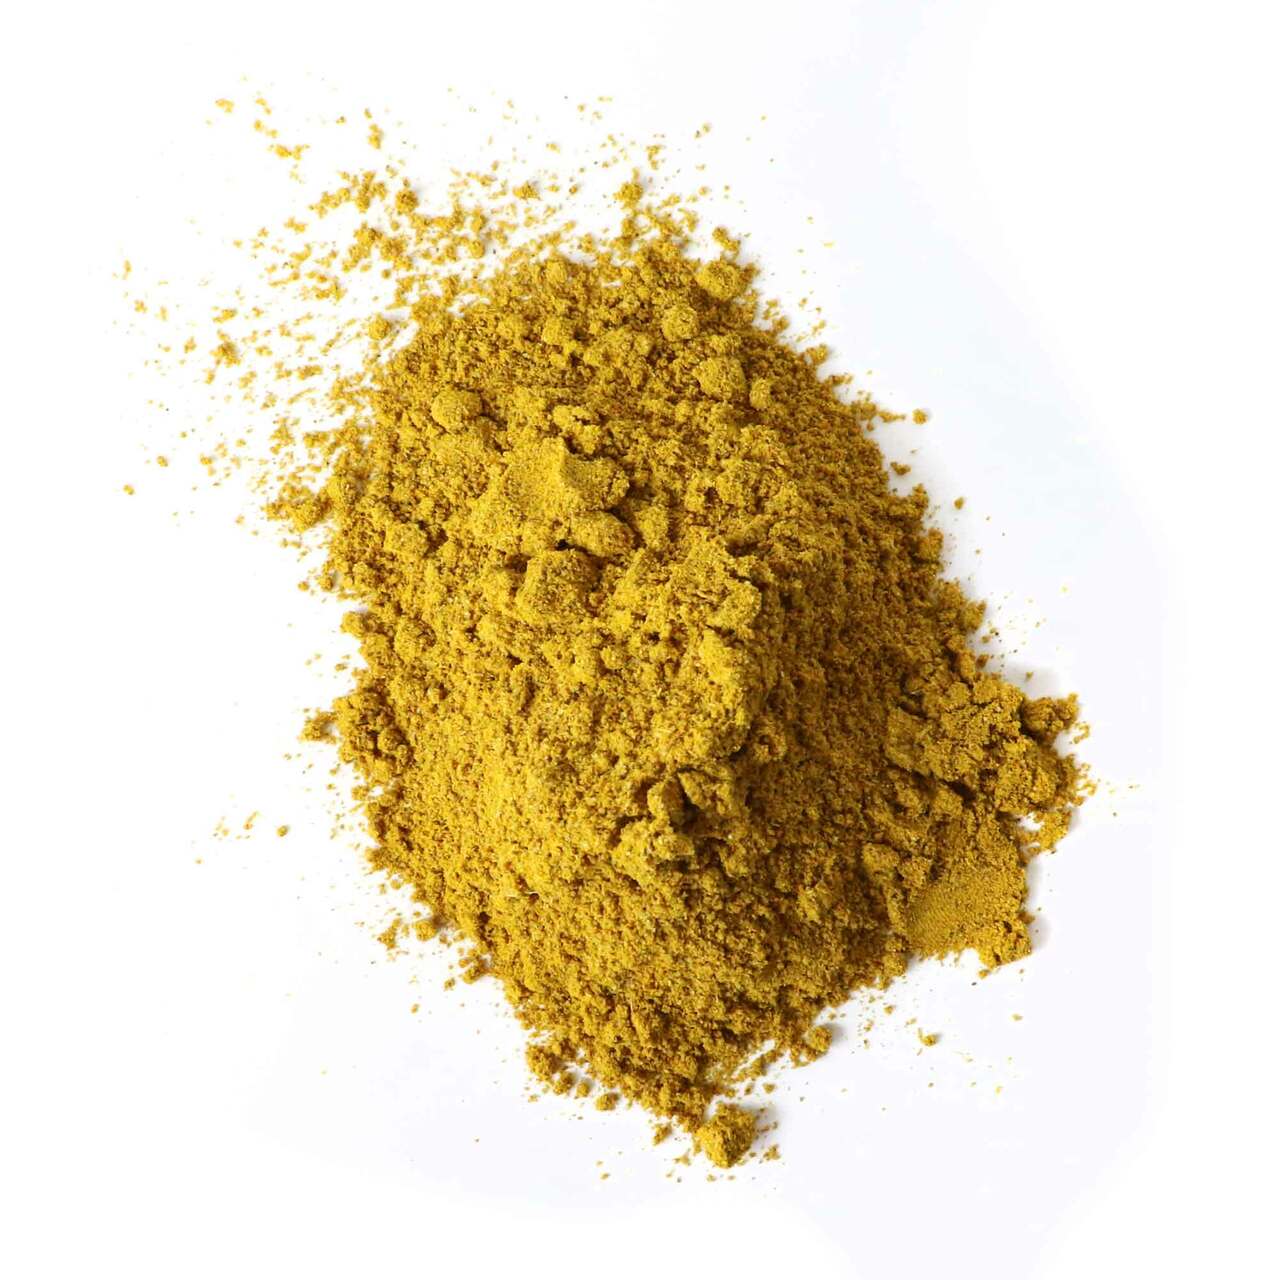 Spiceology Kwame Onwuachi Toasted Curry Powder